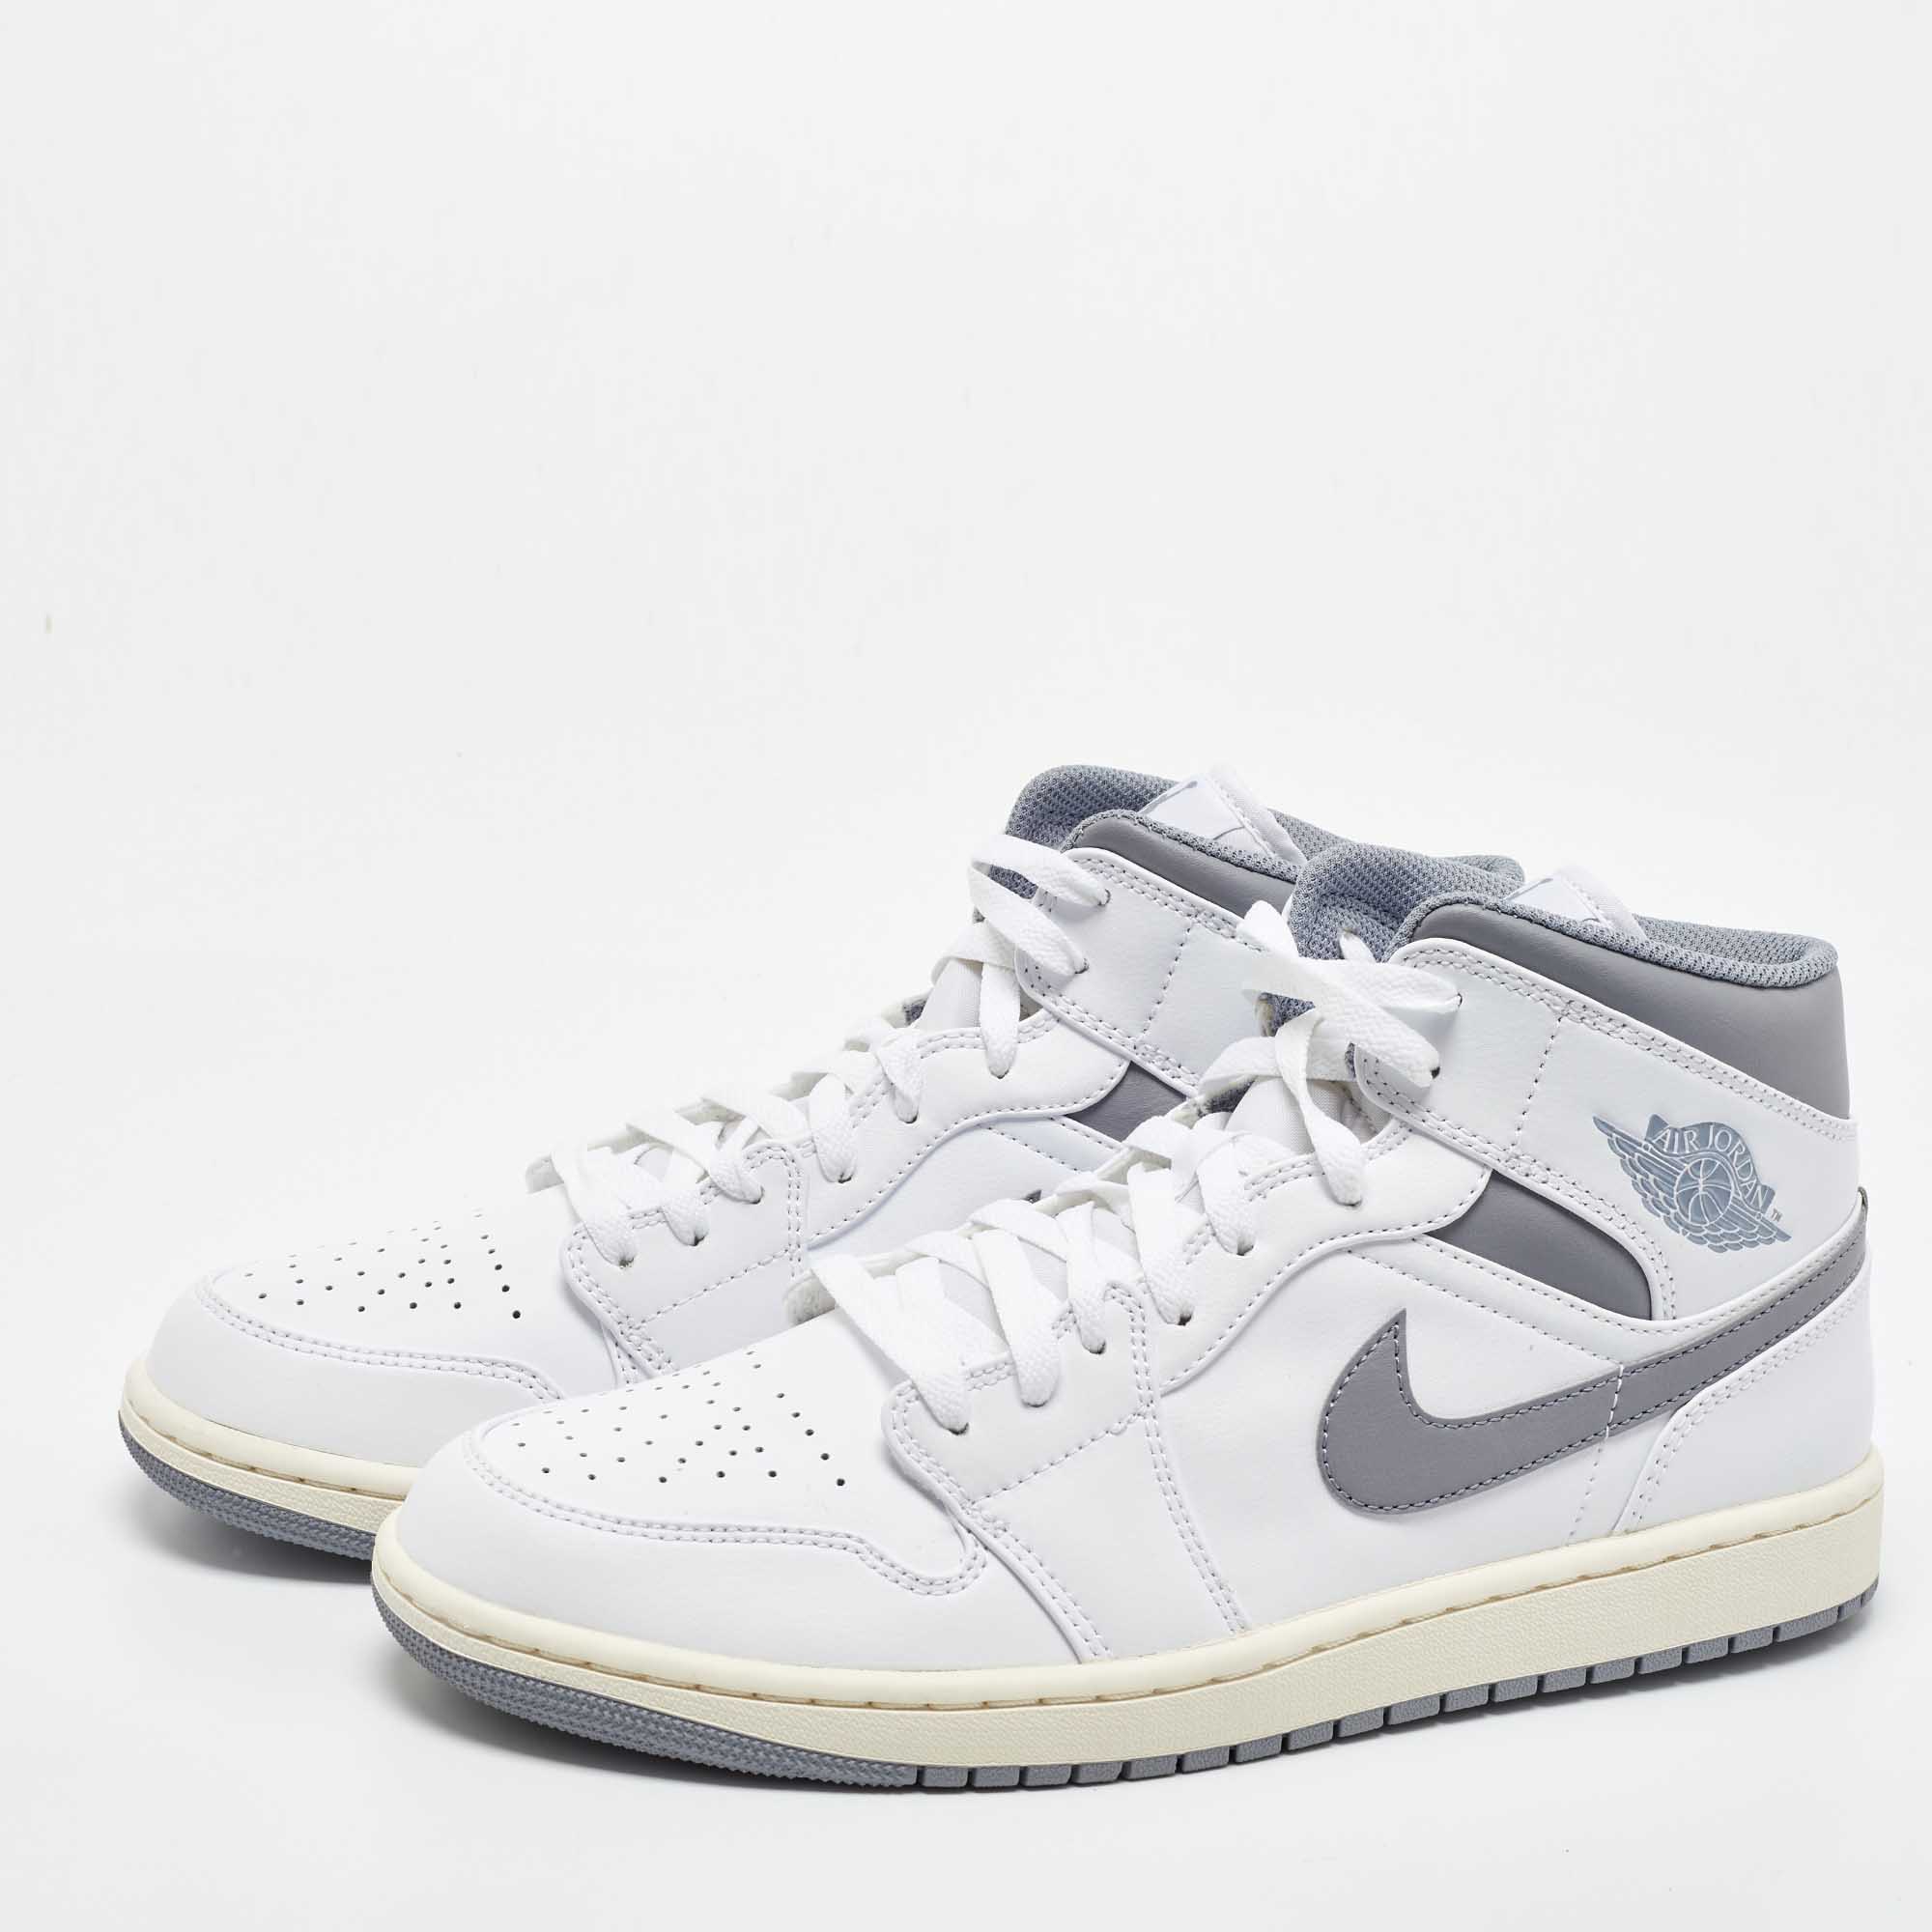 

Air Jordans White/Grey Leather Jordan 1Mid Neutral Grey Sneakers Size